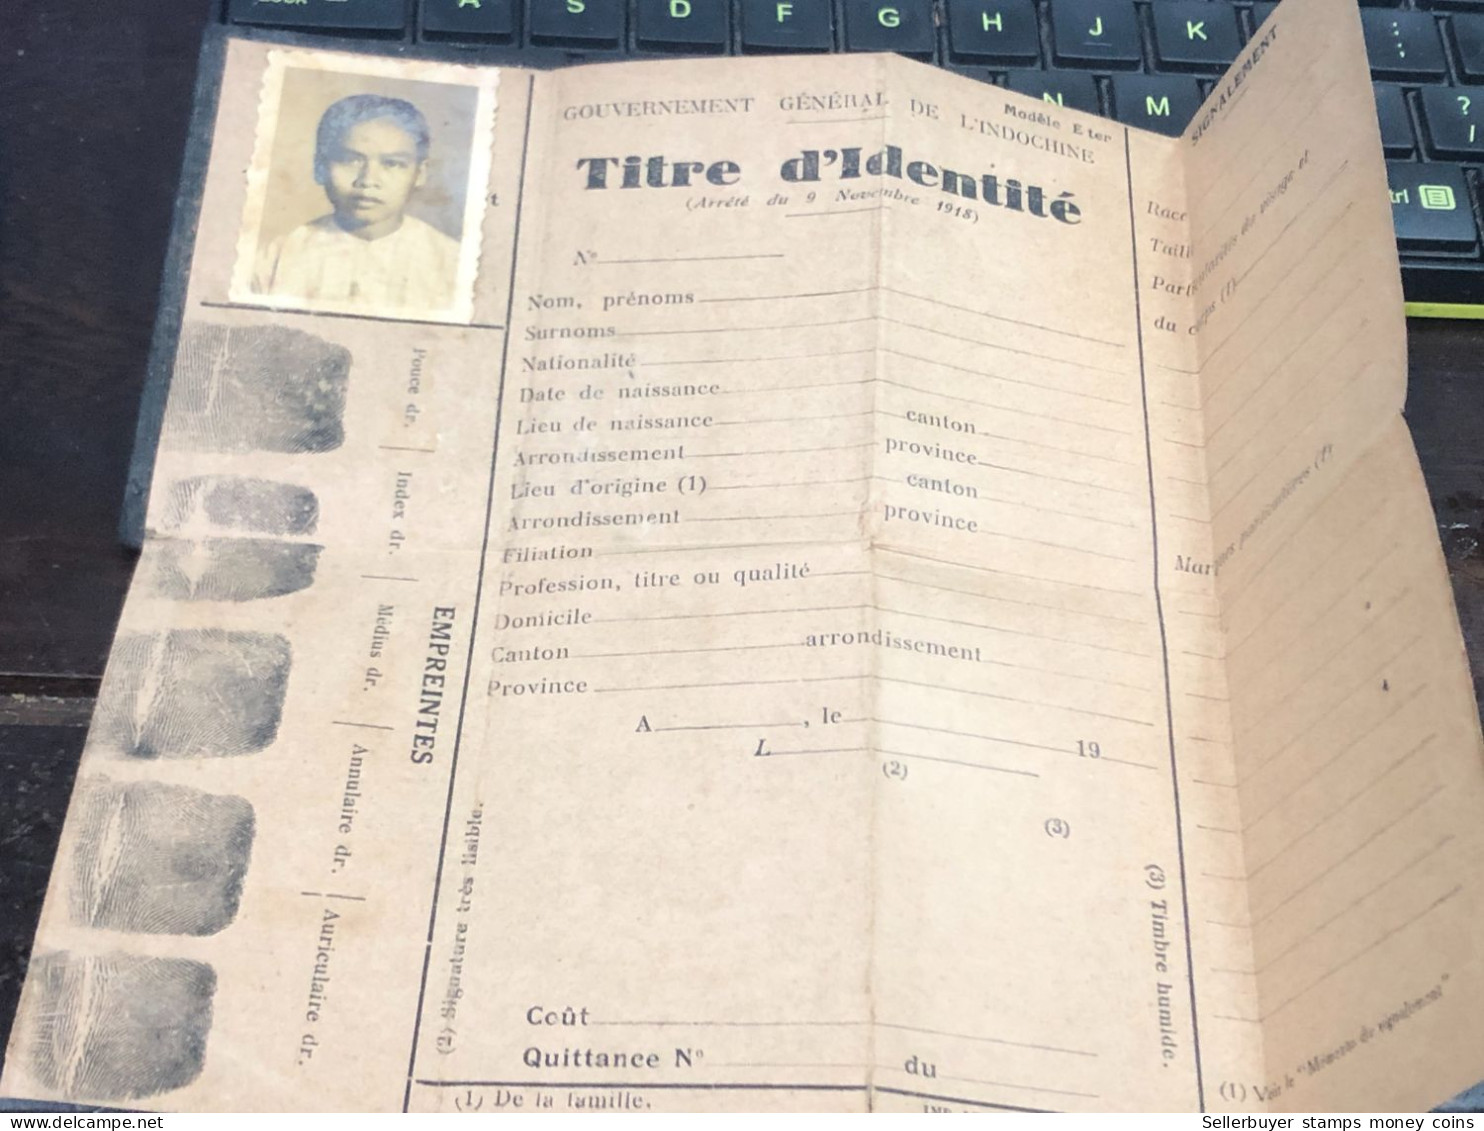 VIET NAM-OLD-ID PASSPORT INDO-CHINE-name-CHUA SAI QUA-1922-1945-1pcs Book - Sammlungen